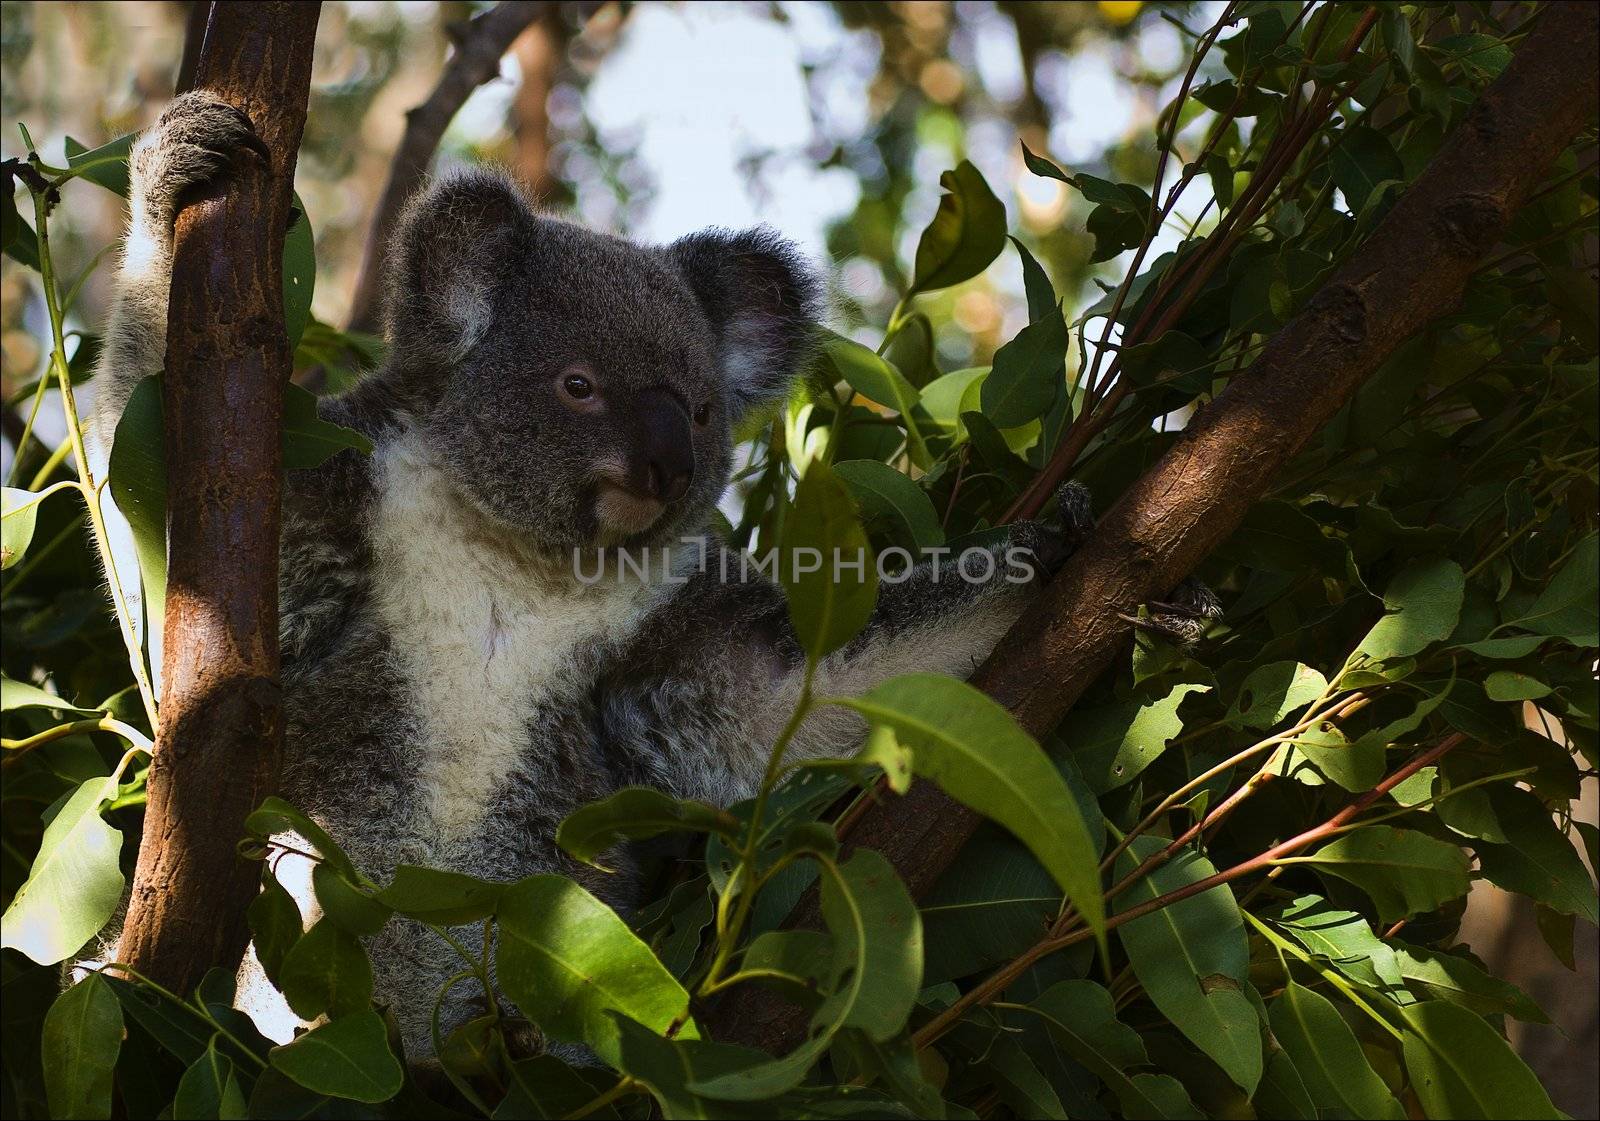 The koala in eucalyptus branches. The koala sits on a tree and moving apart eucalyptus branches looks round around.